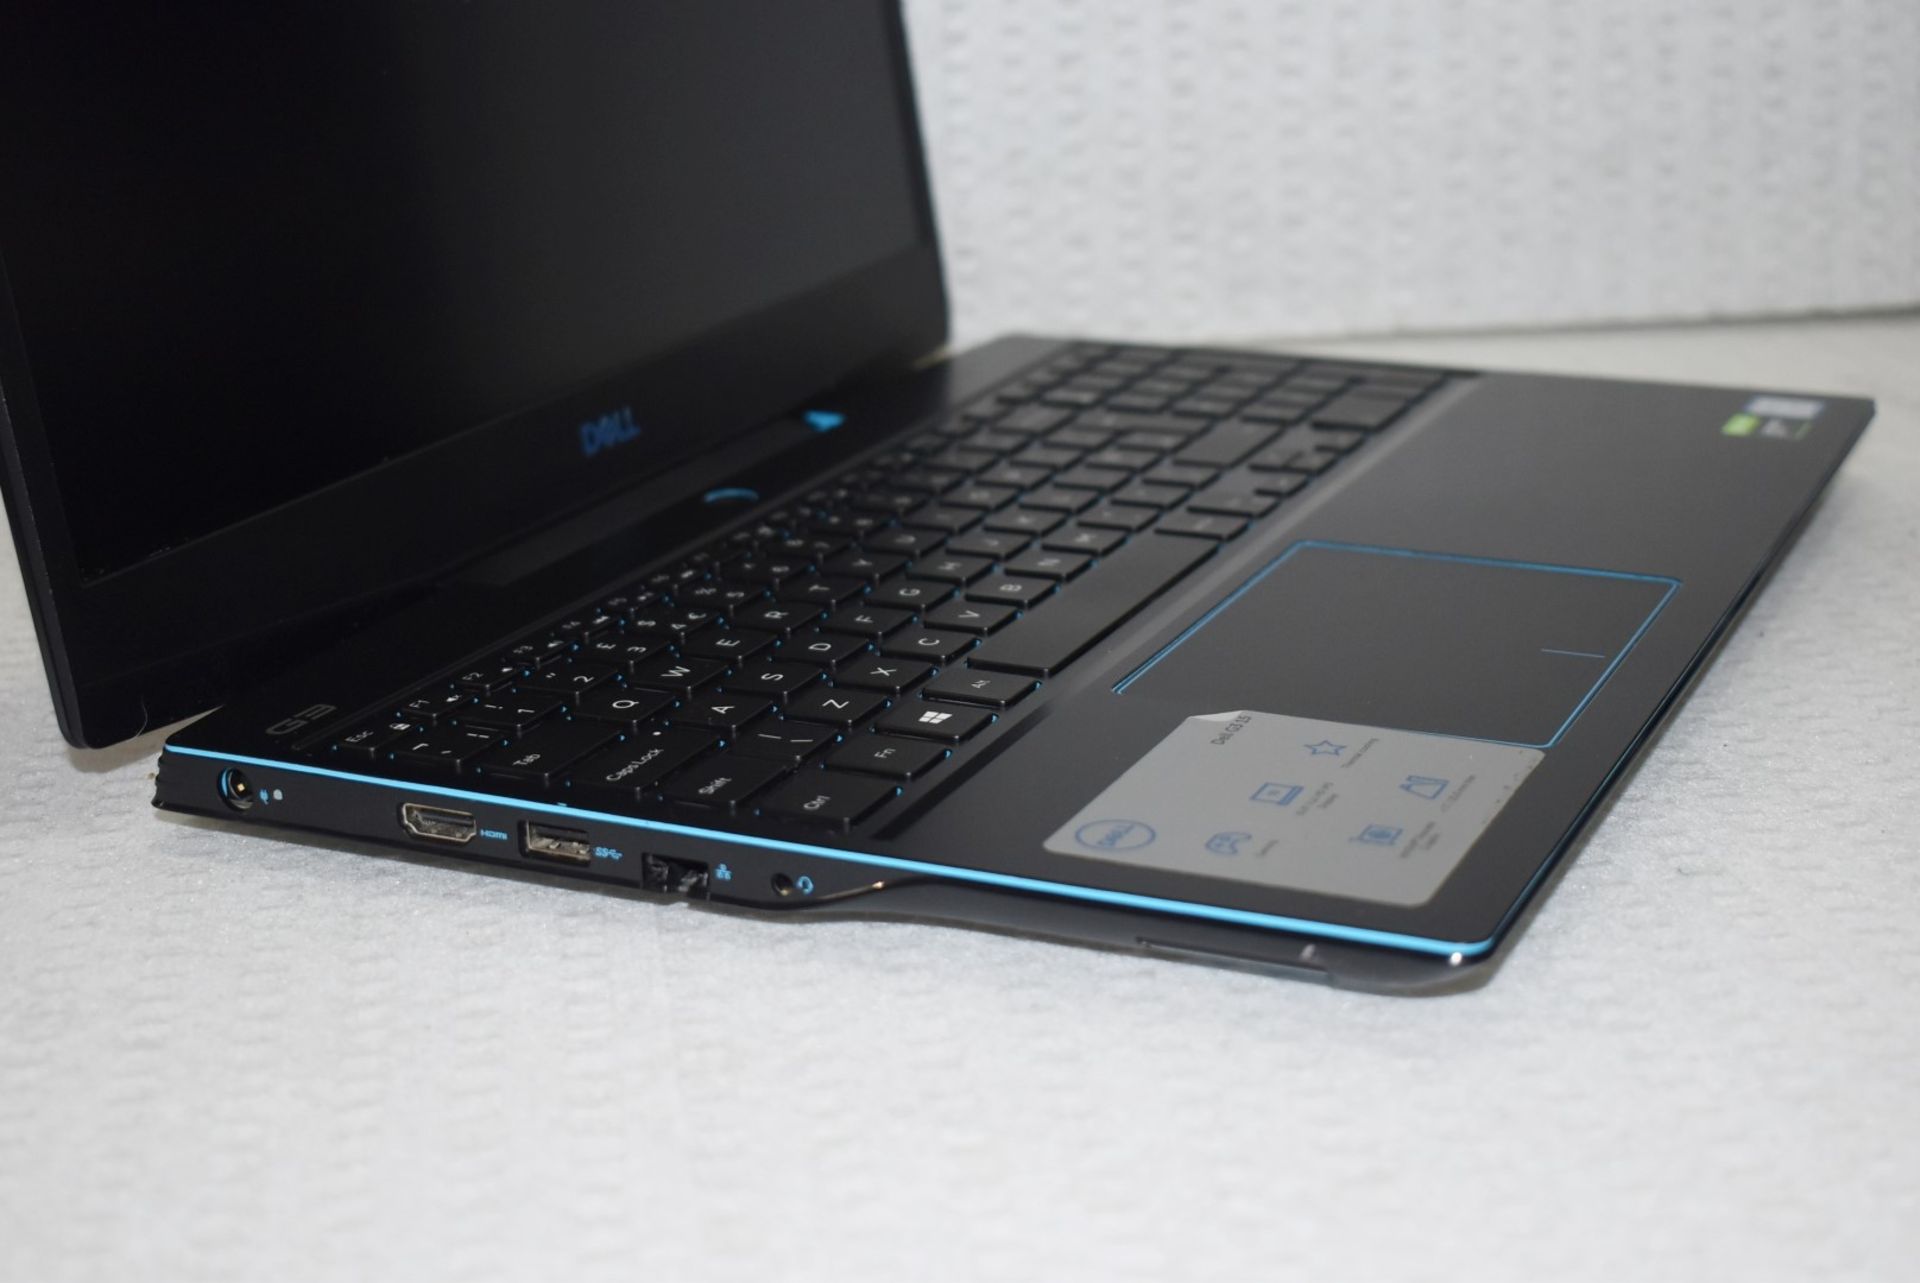 1 x Dell G3 15.6" FHD Gaming Laptop - Intel I5-9300H CPU, 8gb DDR4 Ram, 500gb SSD, GTX1050 Graphics - Image 13 of 30